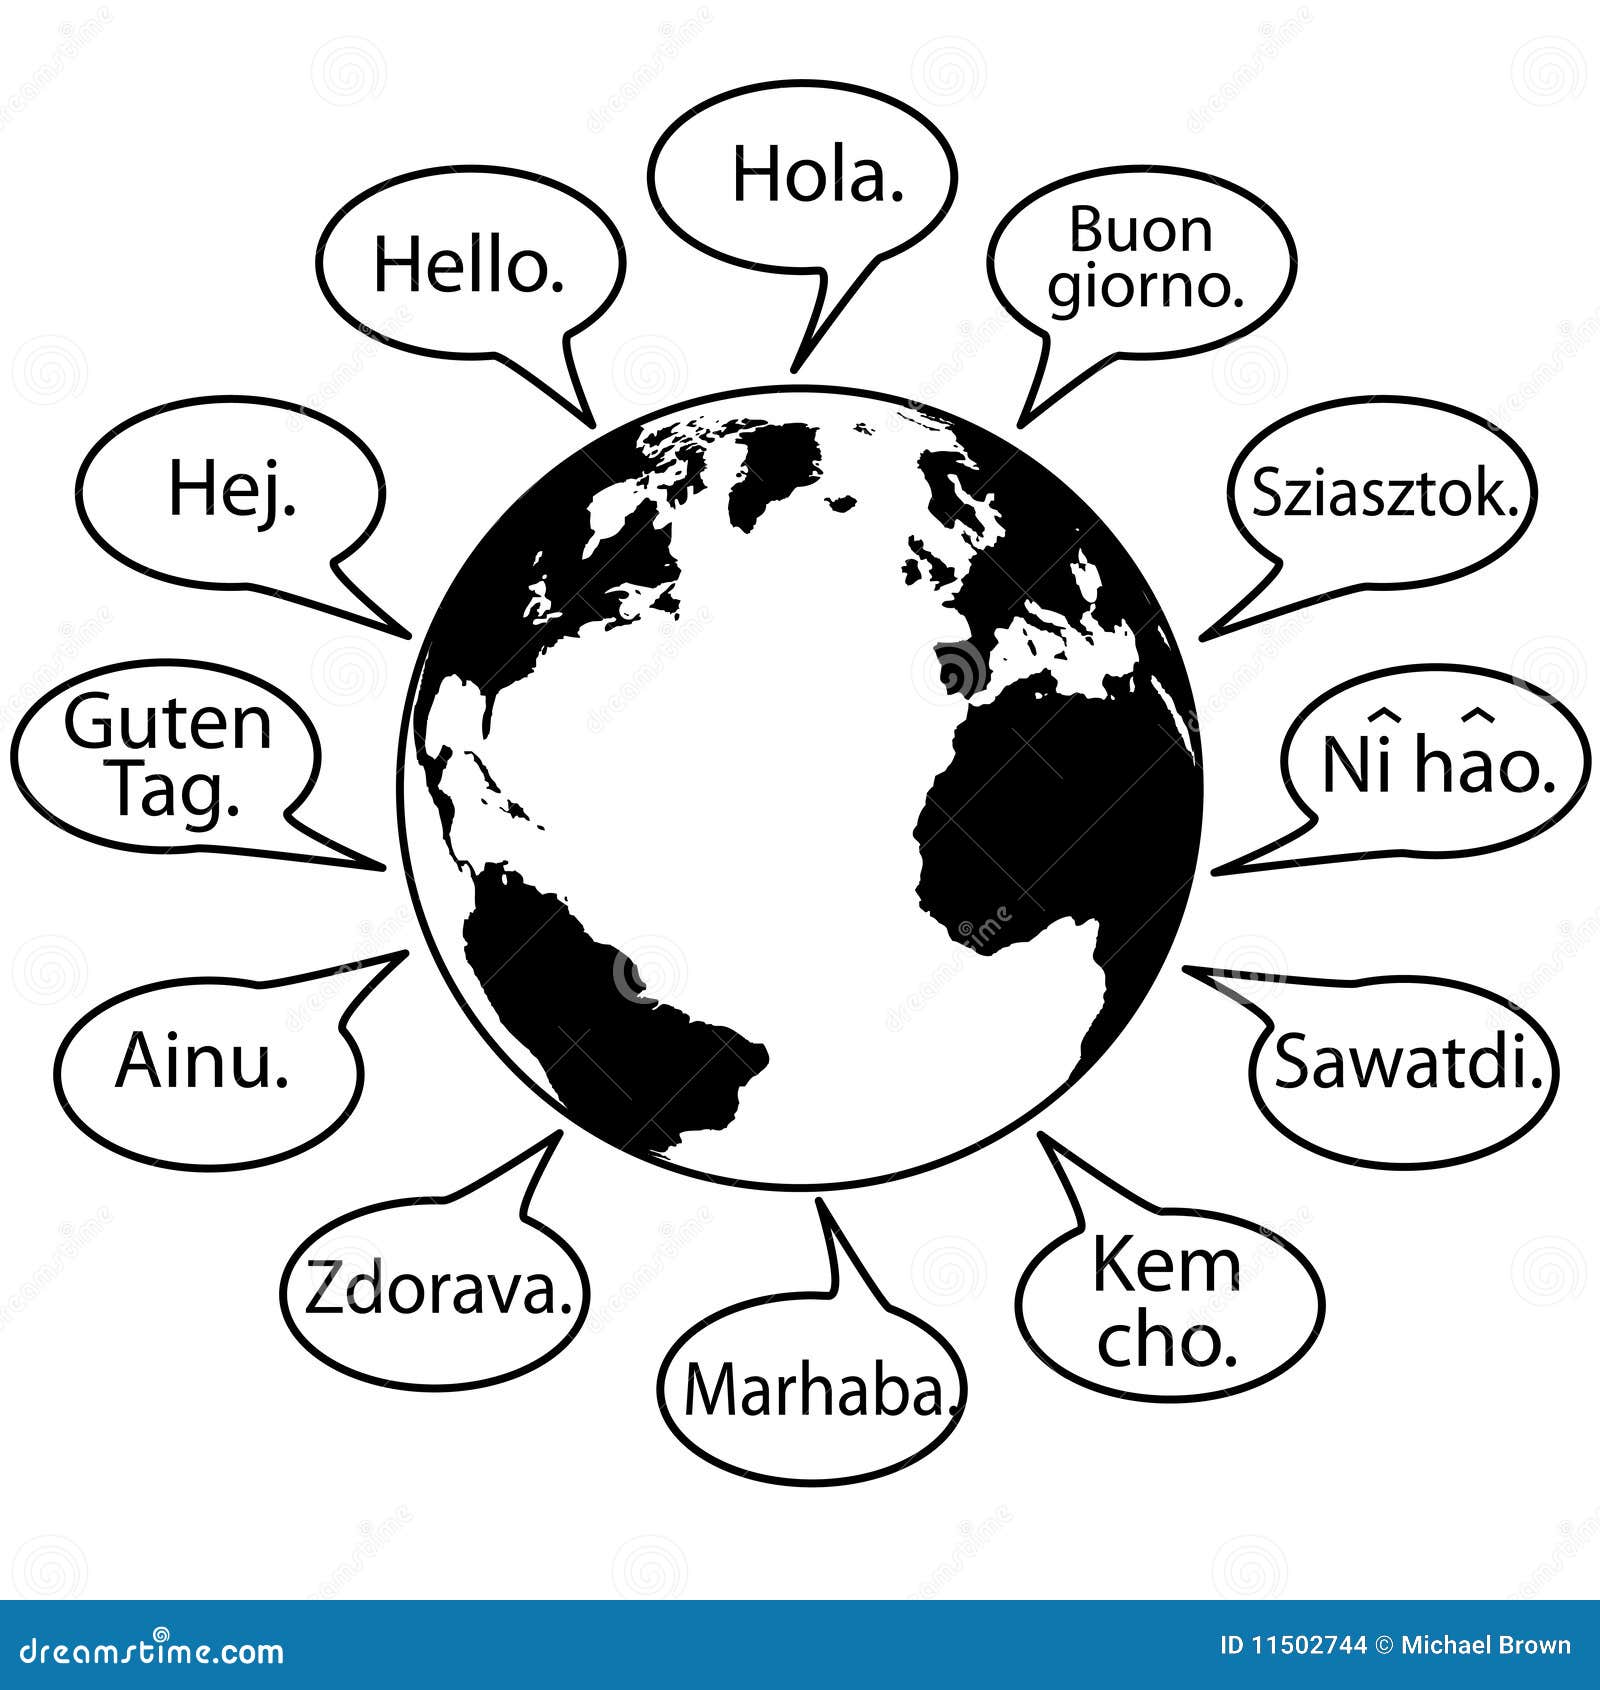 translate earth languages say hello world